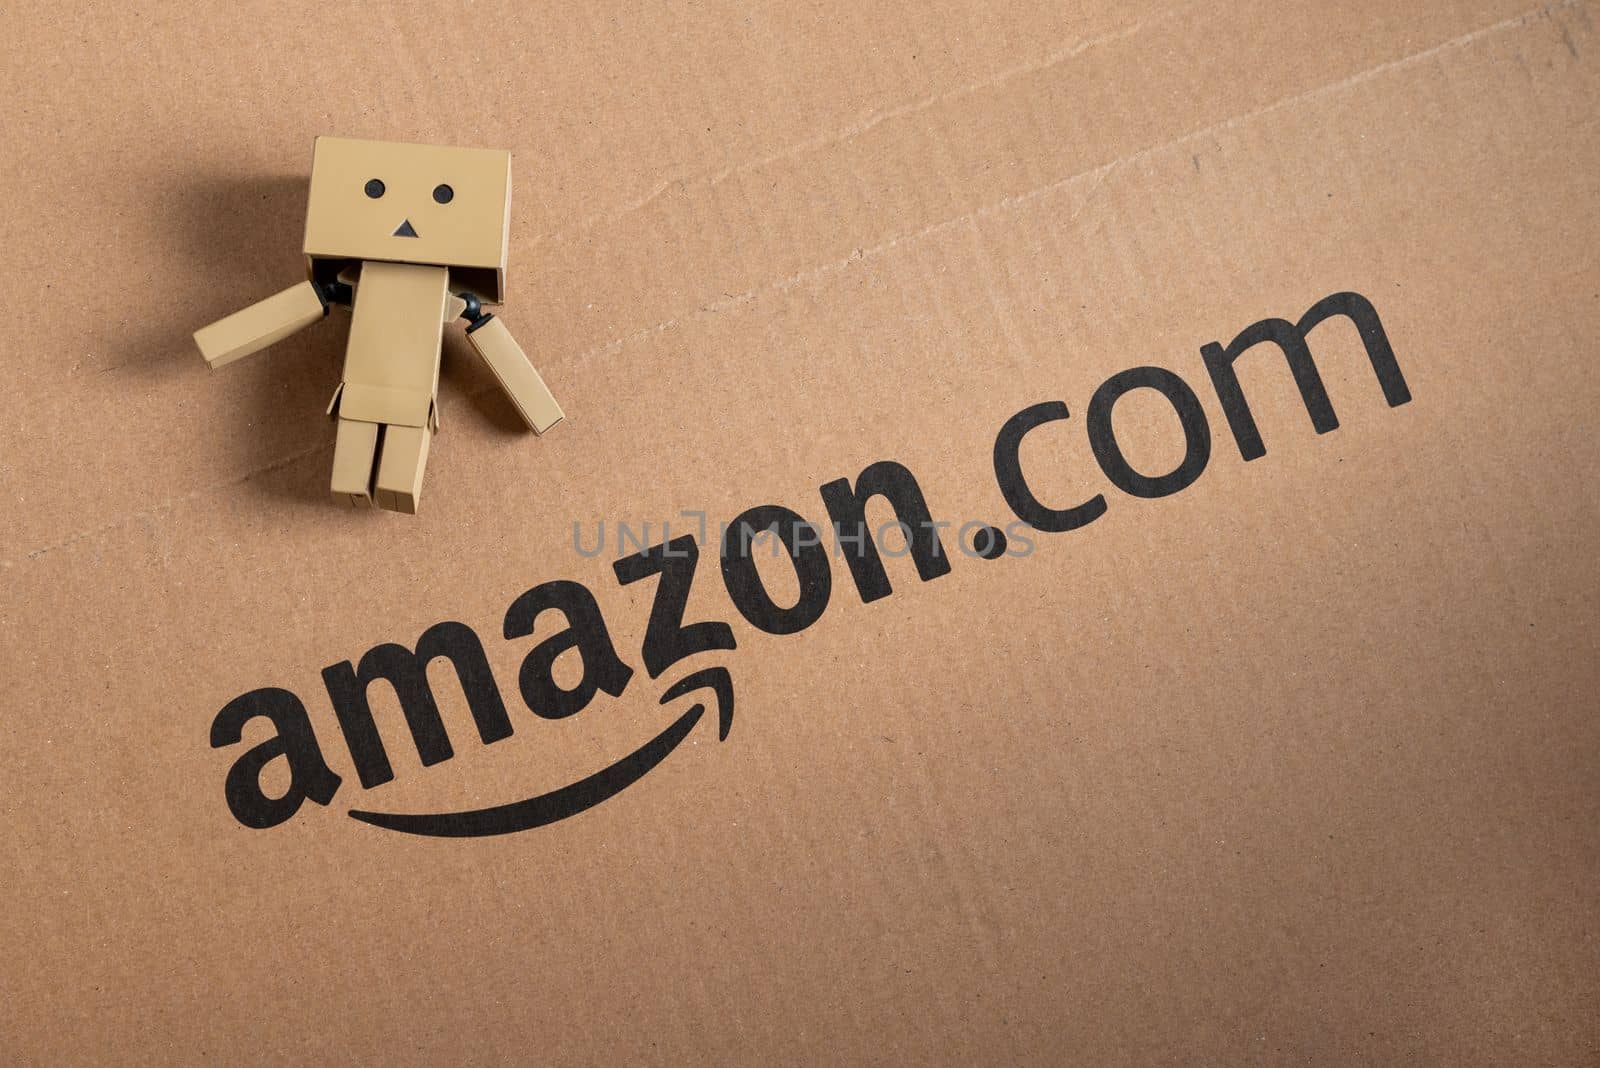 Antalya, Turkey - January 01, 2023: The logo of Amazon, a worldwide e-commerce company, printed on a Recycled cardboard box by Sonat